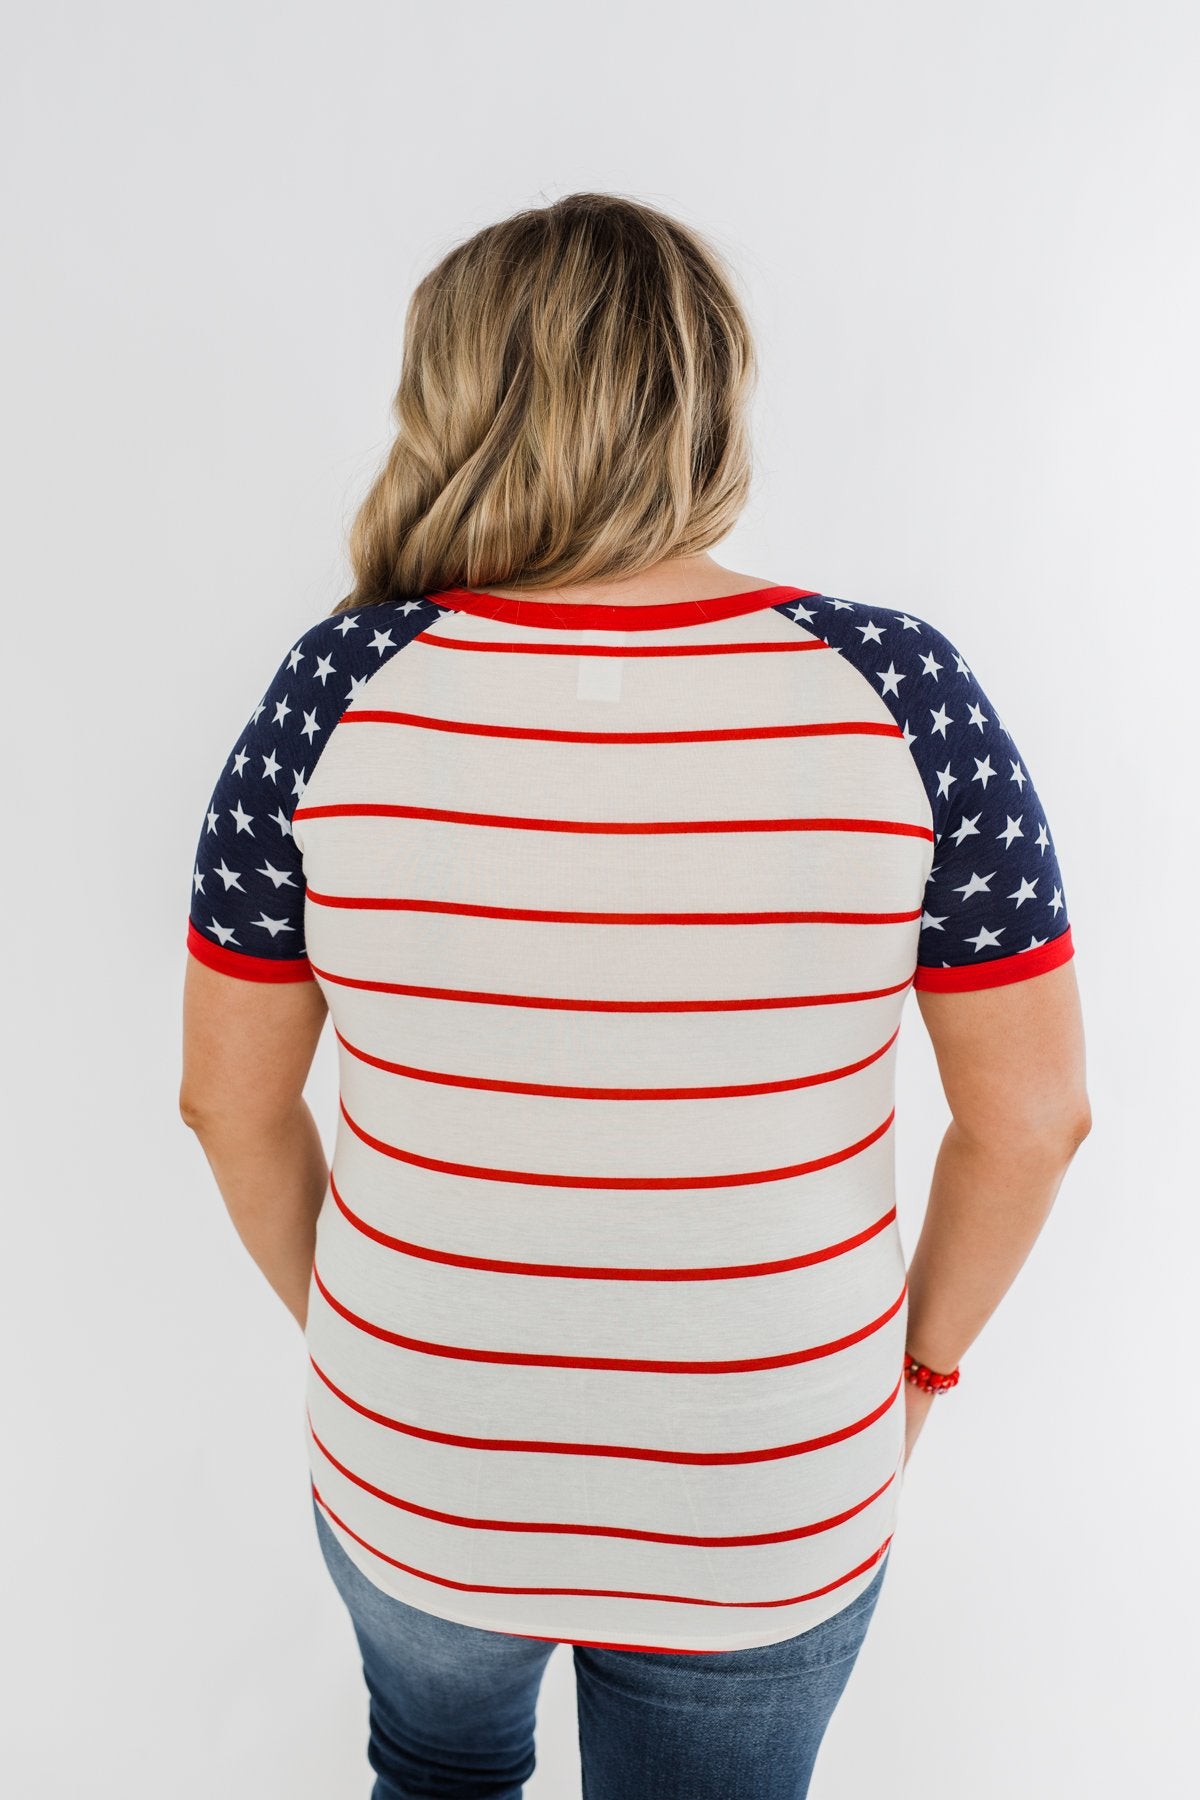 Stars & Stripes Short Sleeve Raglan Top- Red, Ivory, & Navy